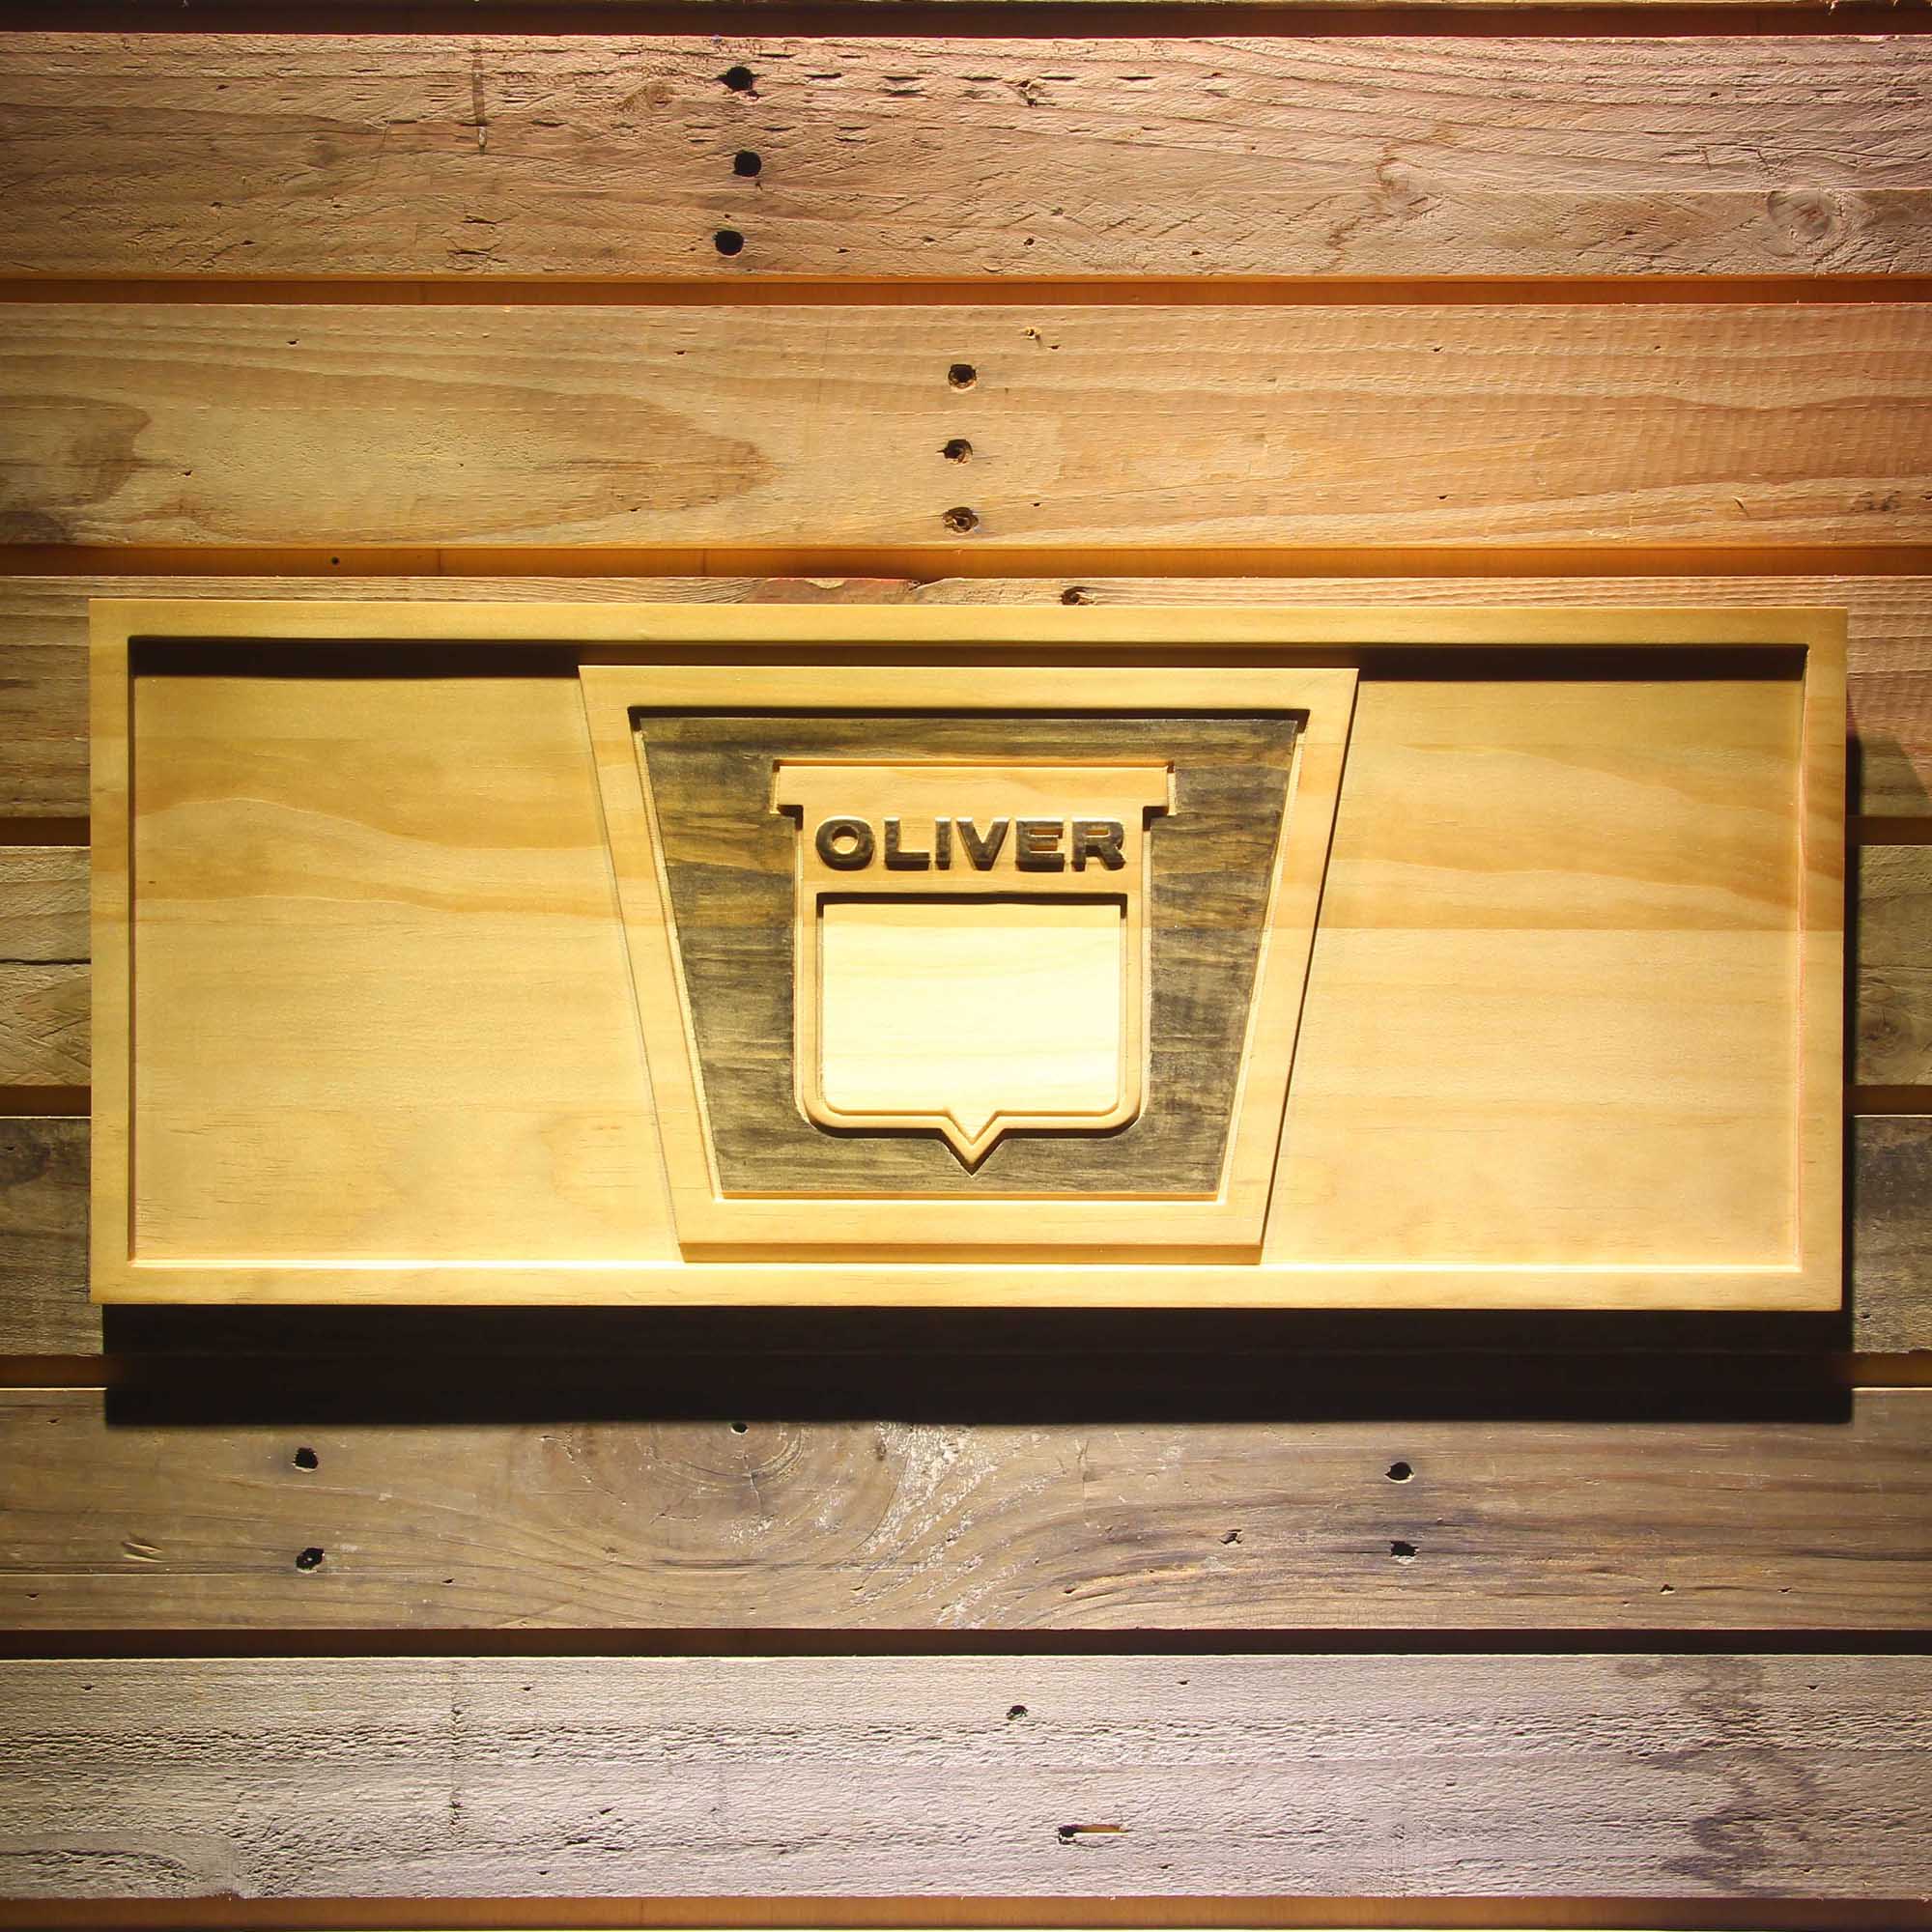 Oliver Tractor 3D Wooden Engrave Sign